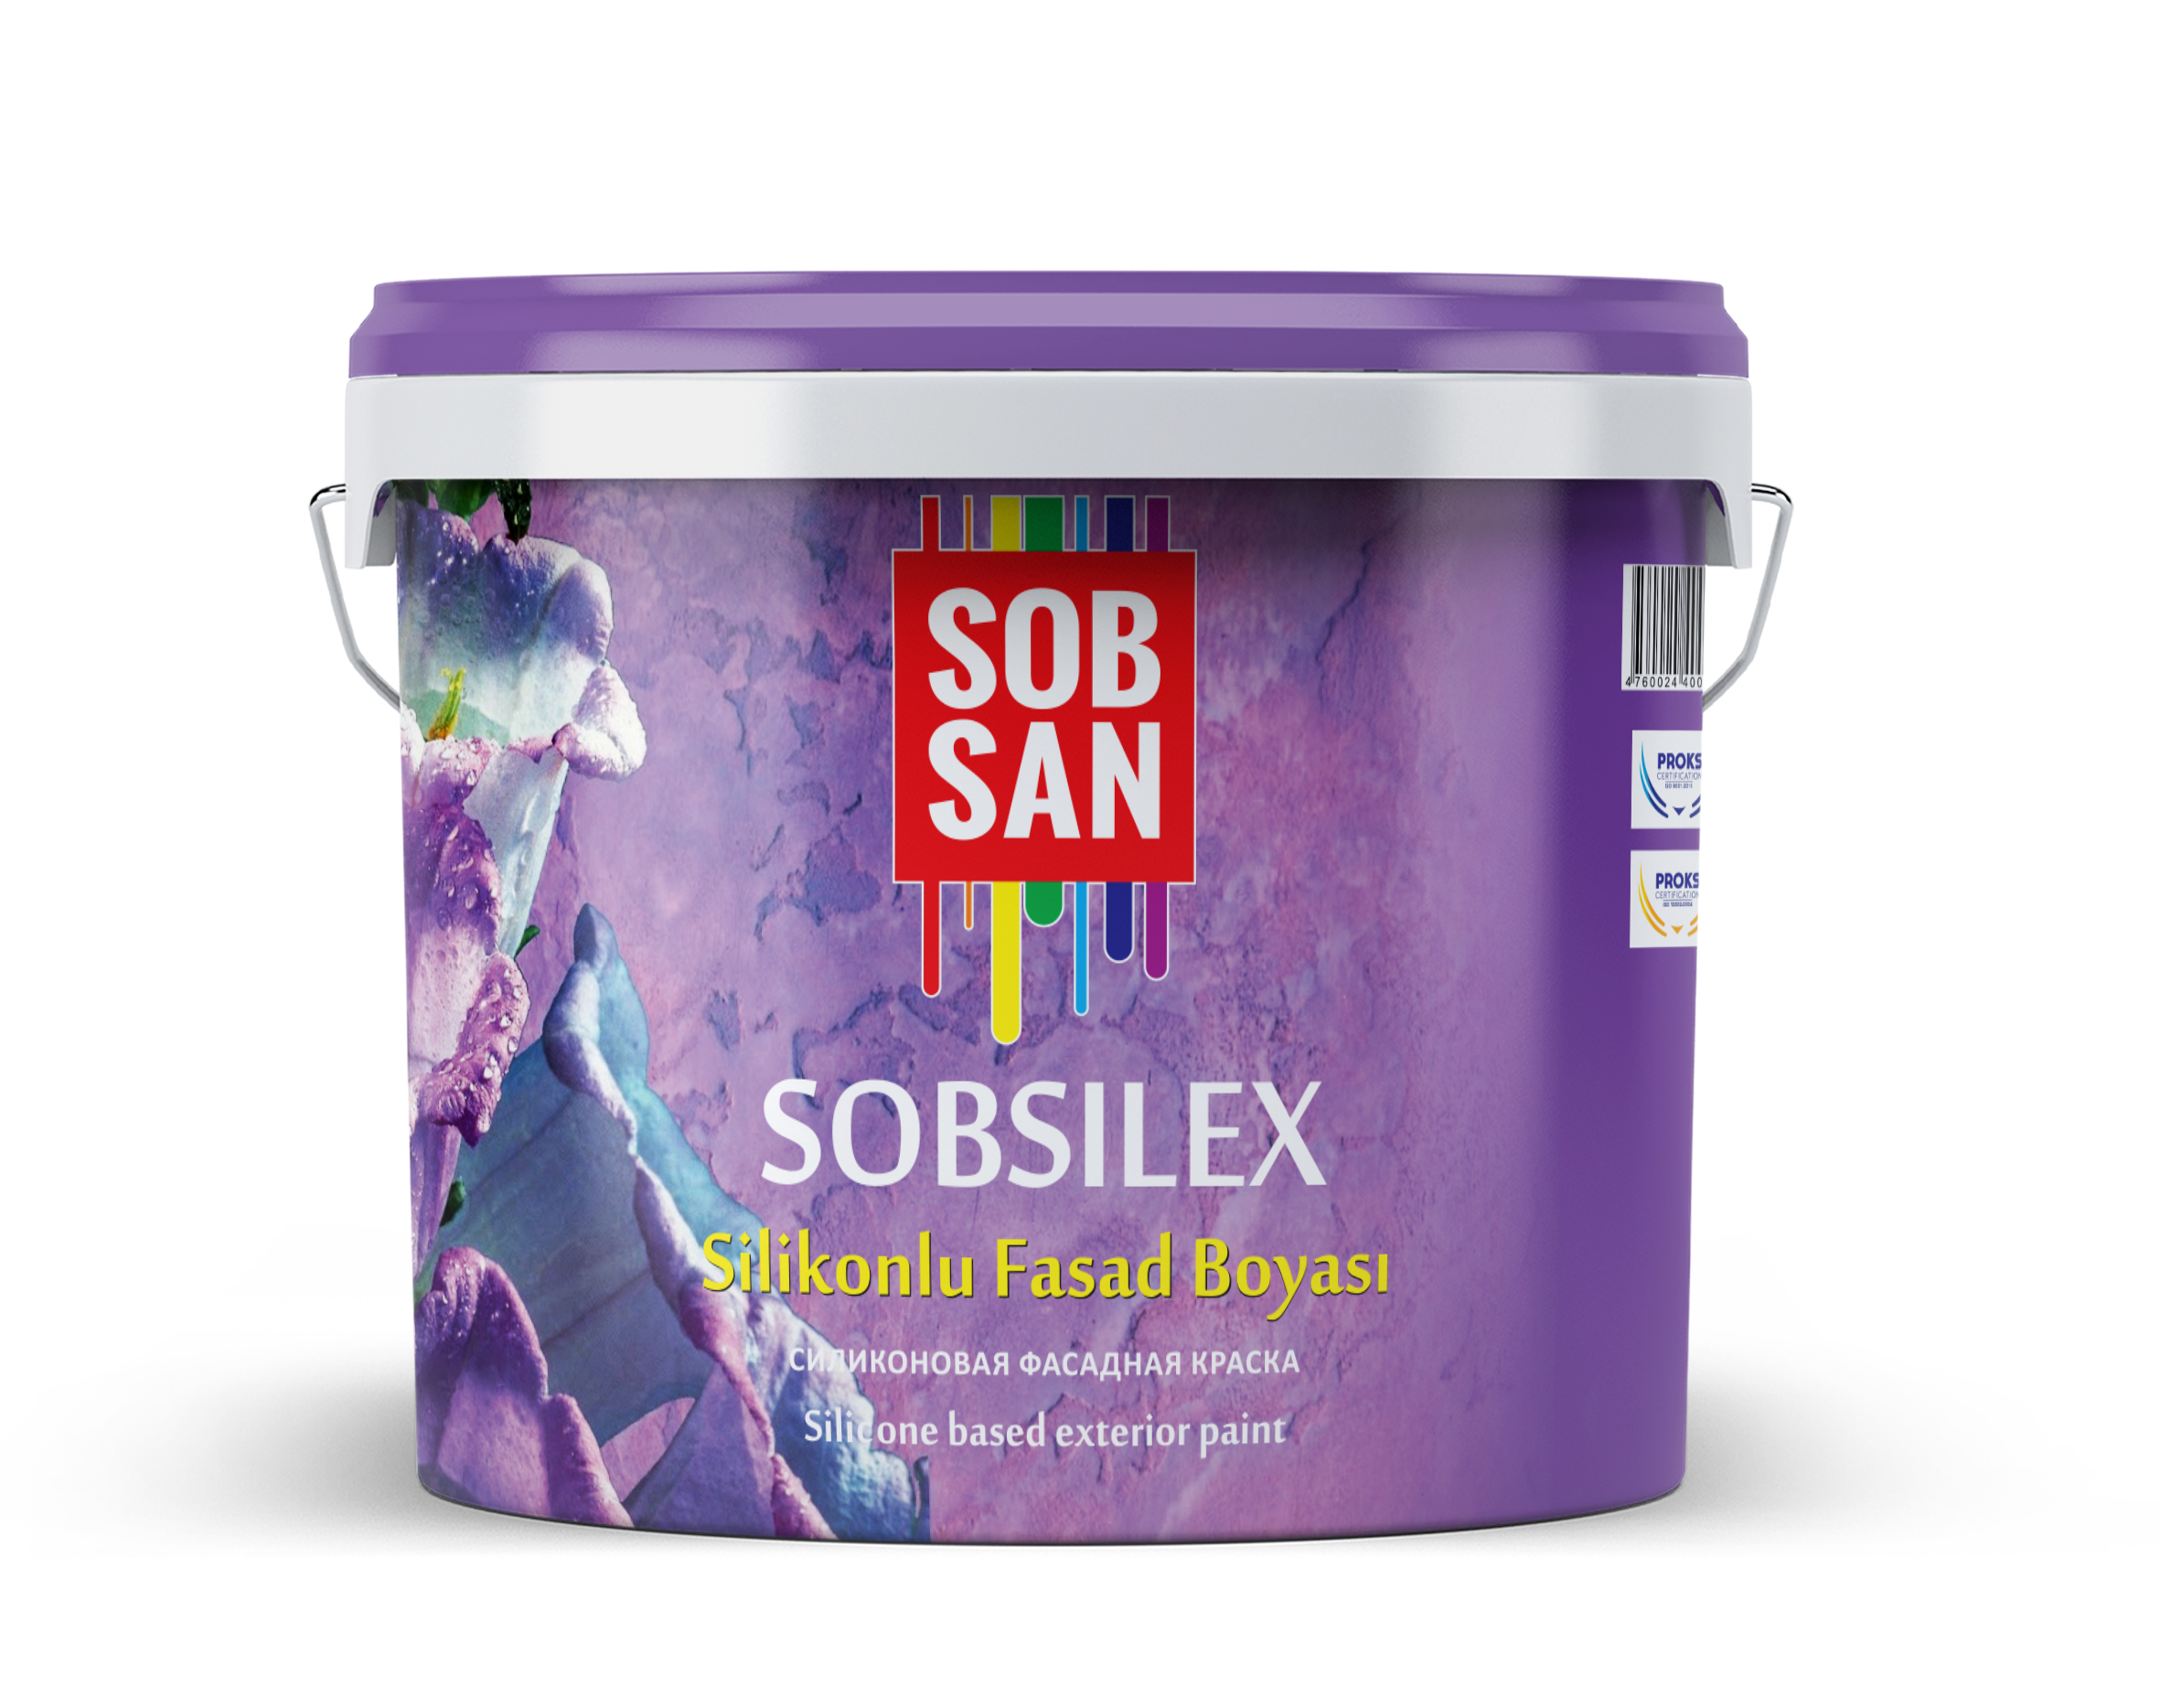 SOBSILEX